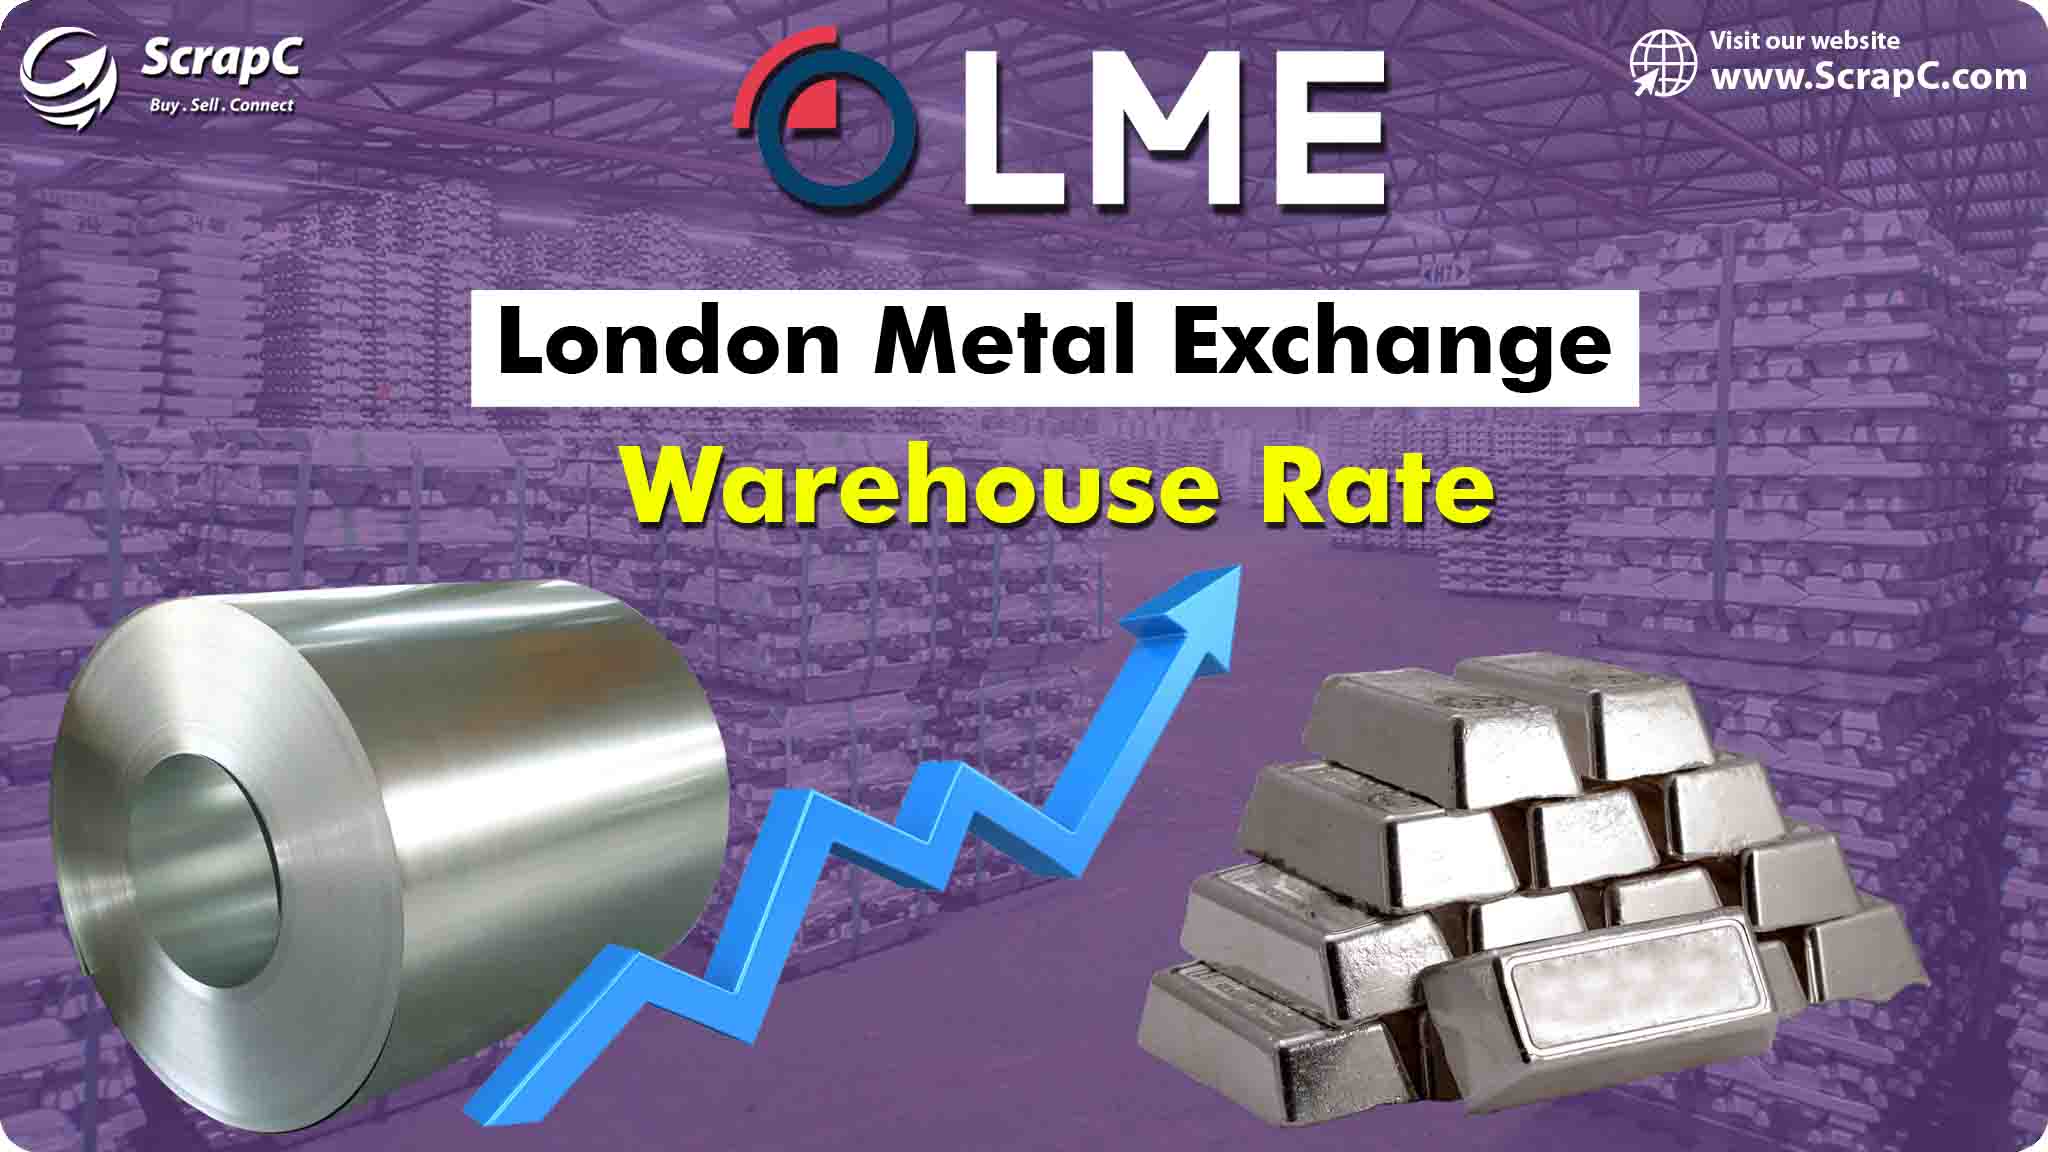 LME warehouse price